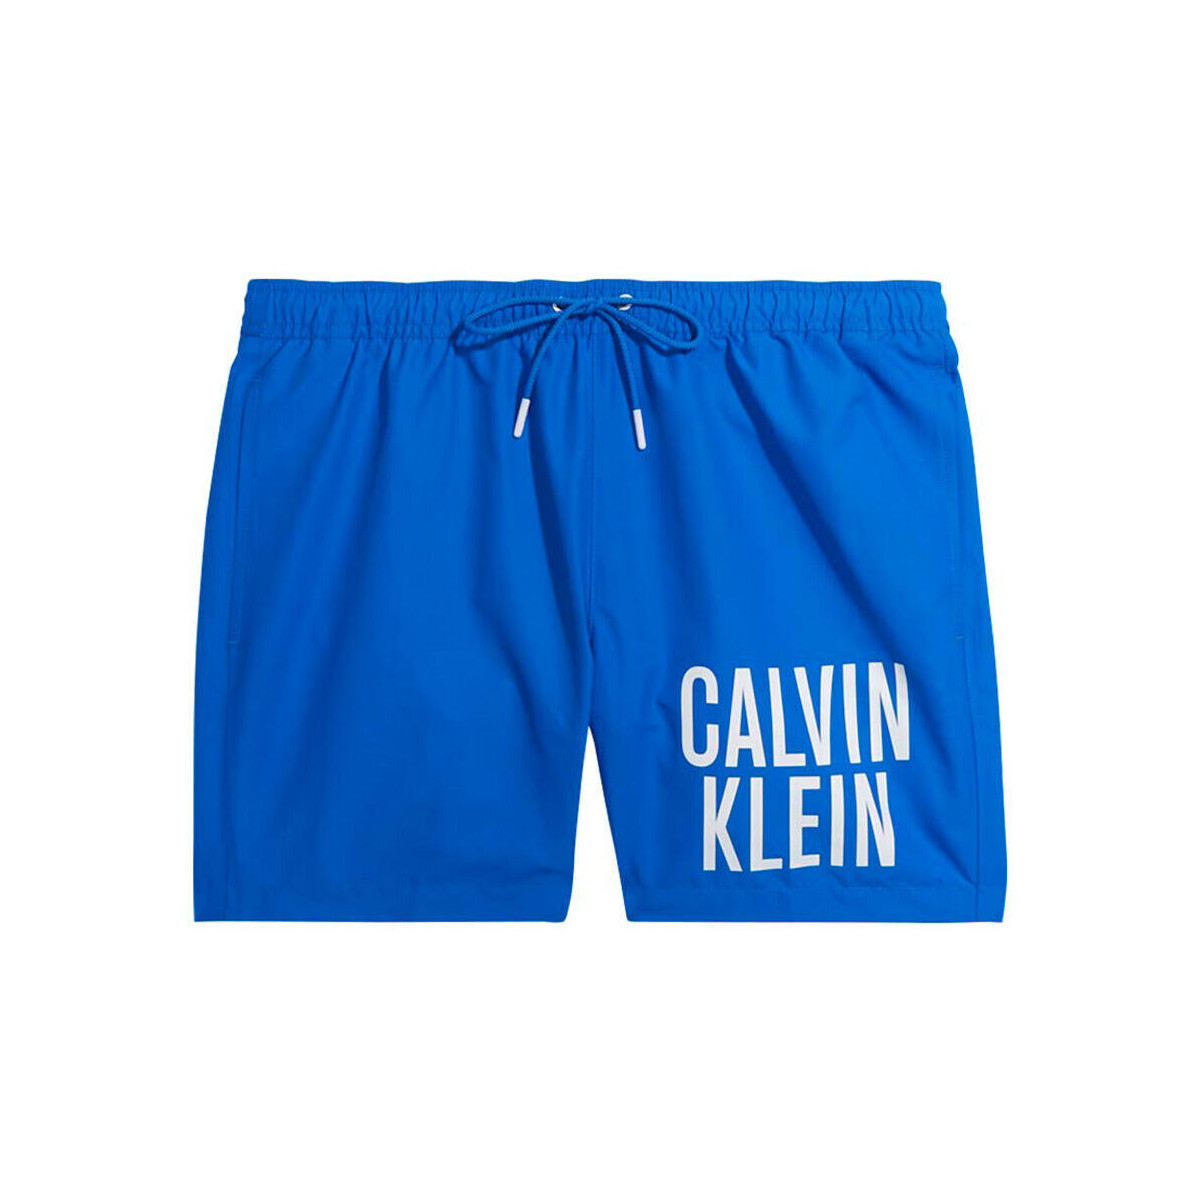 Textil Homem Shorts / Bermudas Calvin Klein Jeans - km0km00794 Azul